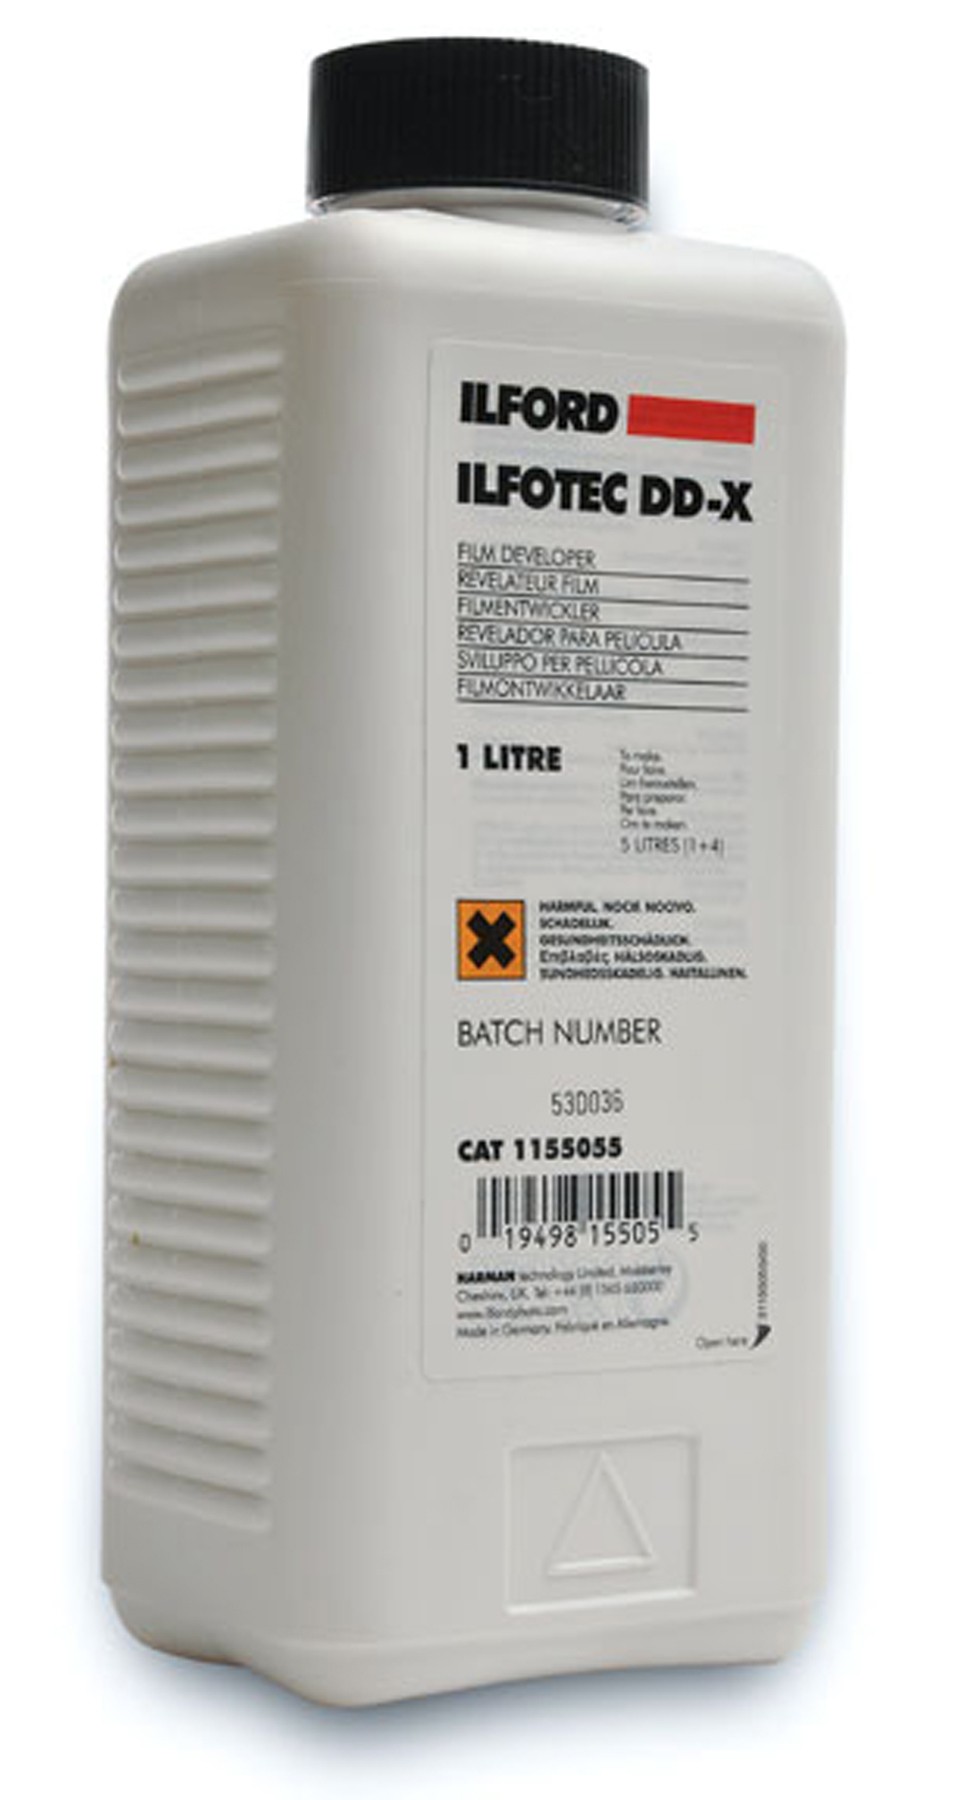 Ilford проявитель для пленки Ilfotec DD-X 1л (1155055)